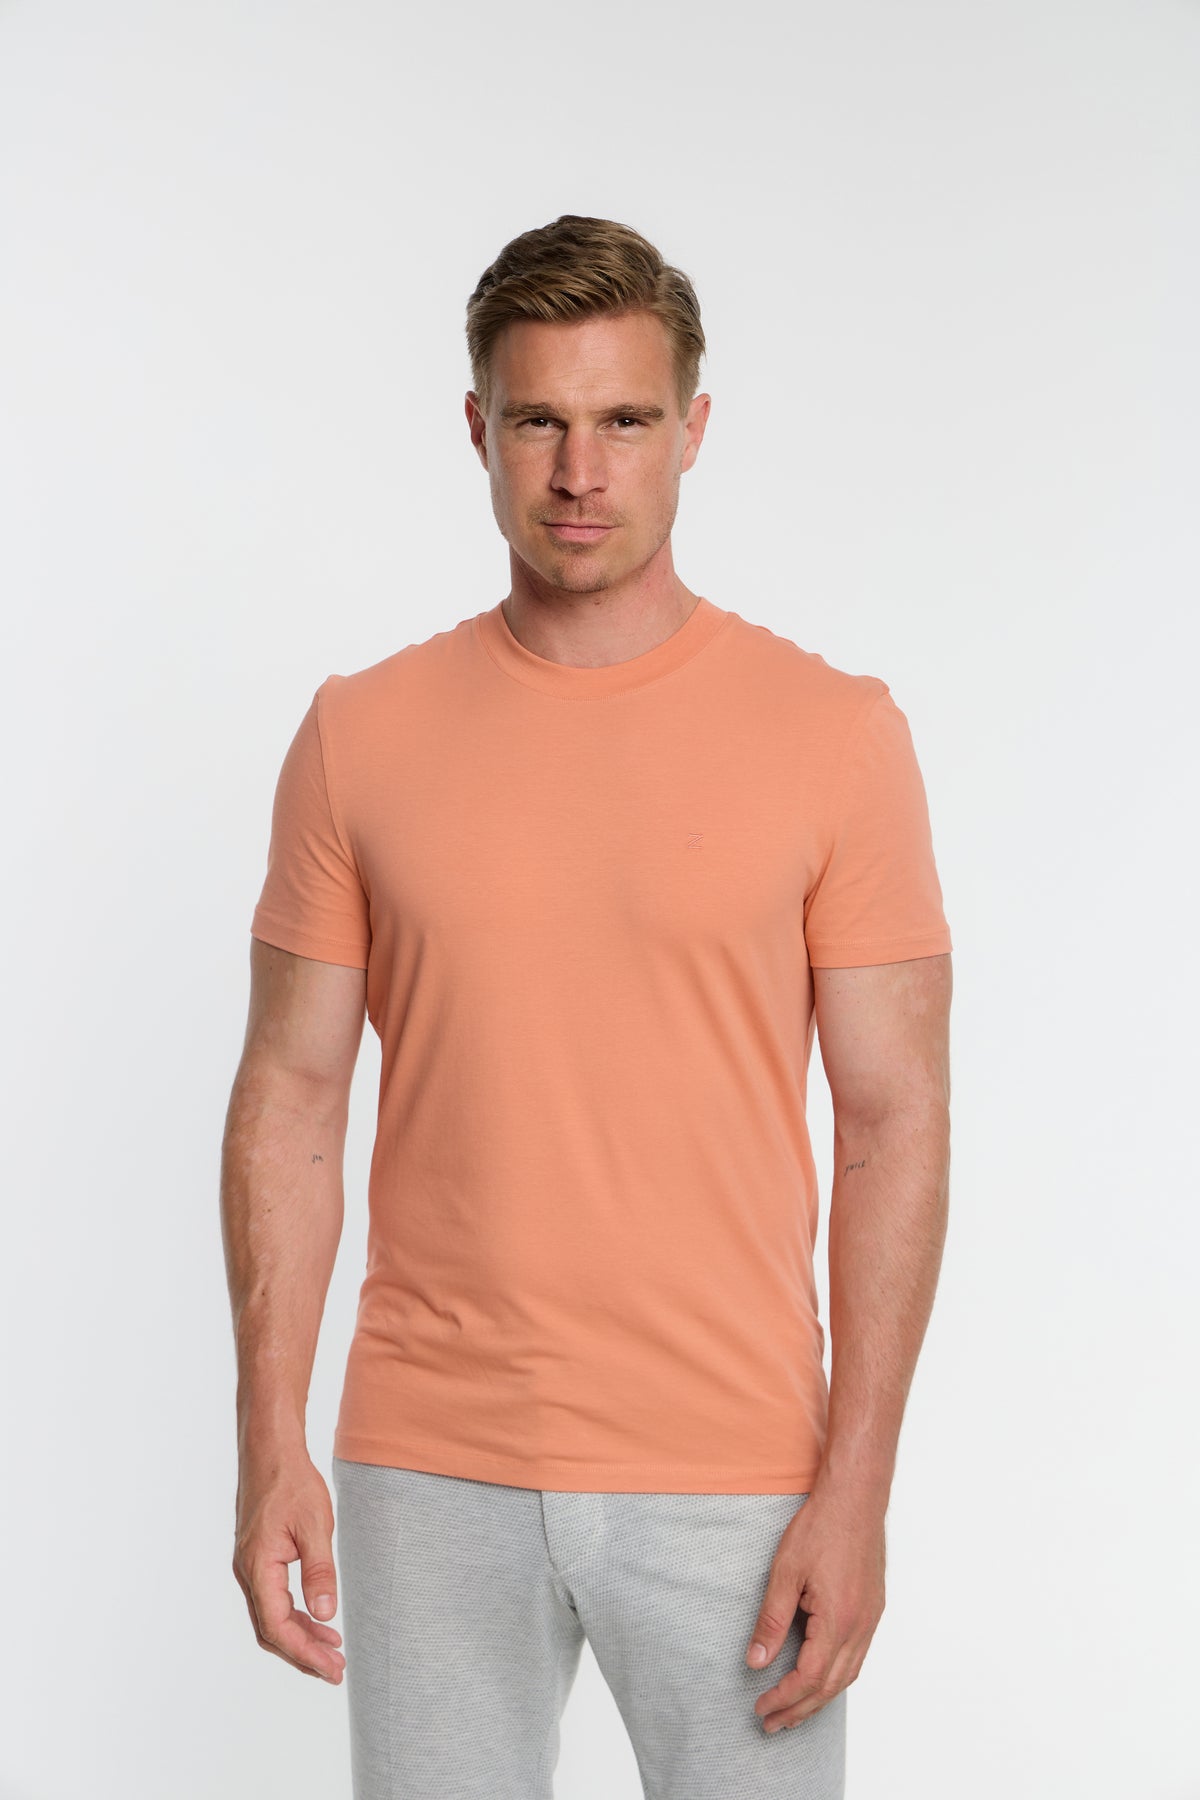 T-Shirt DiFlo 201-480 Orange